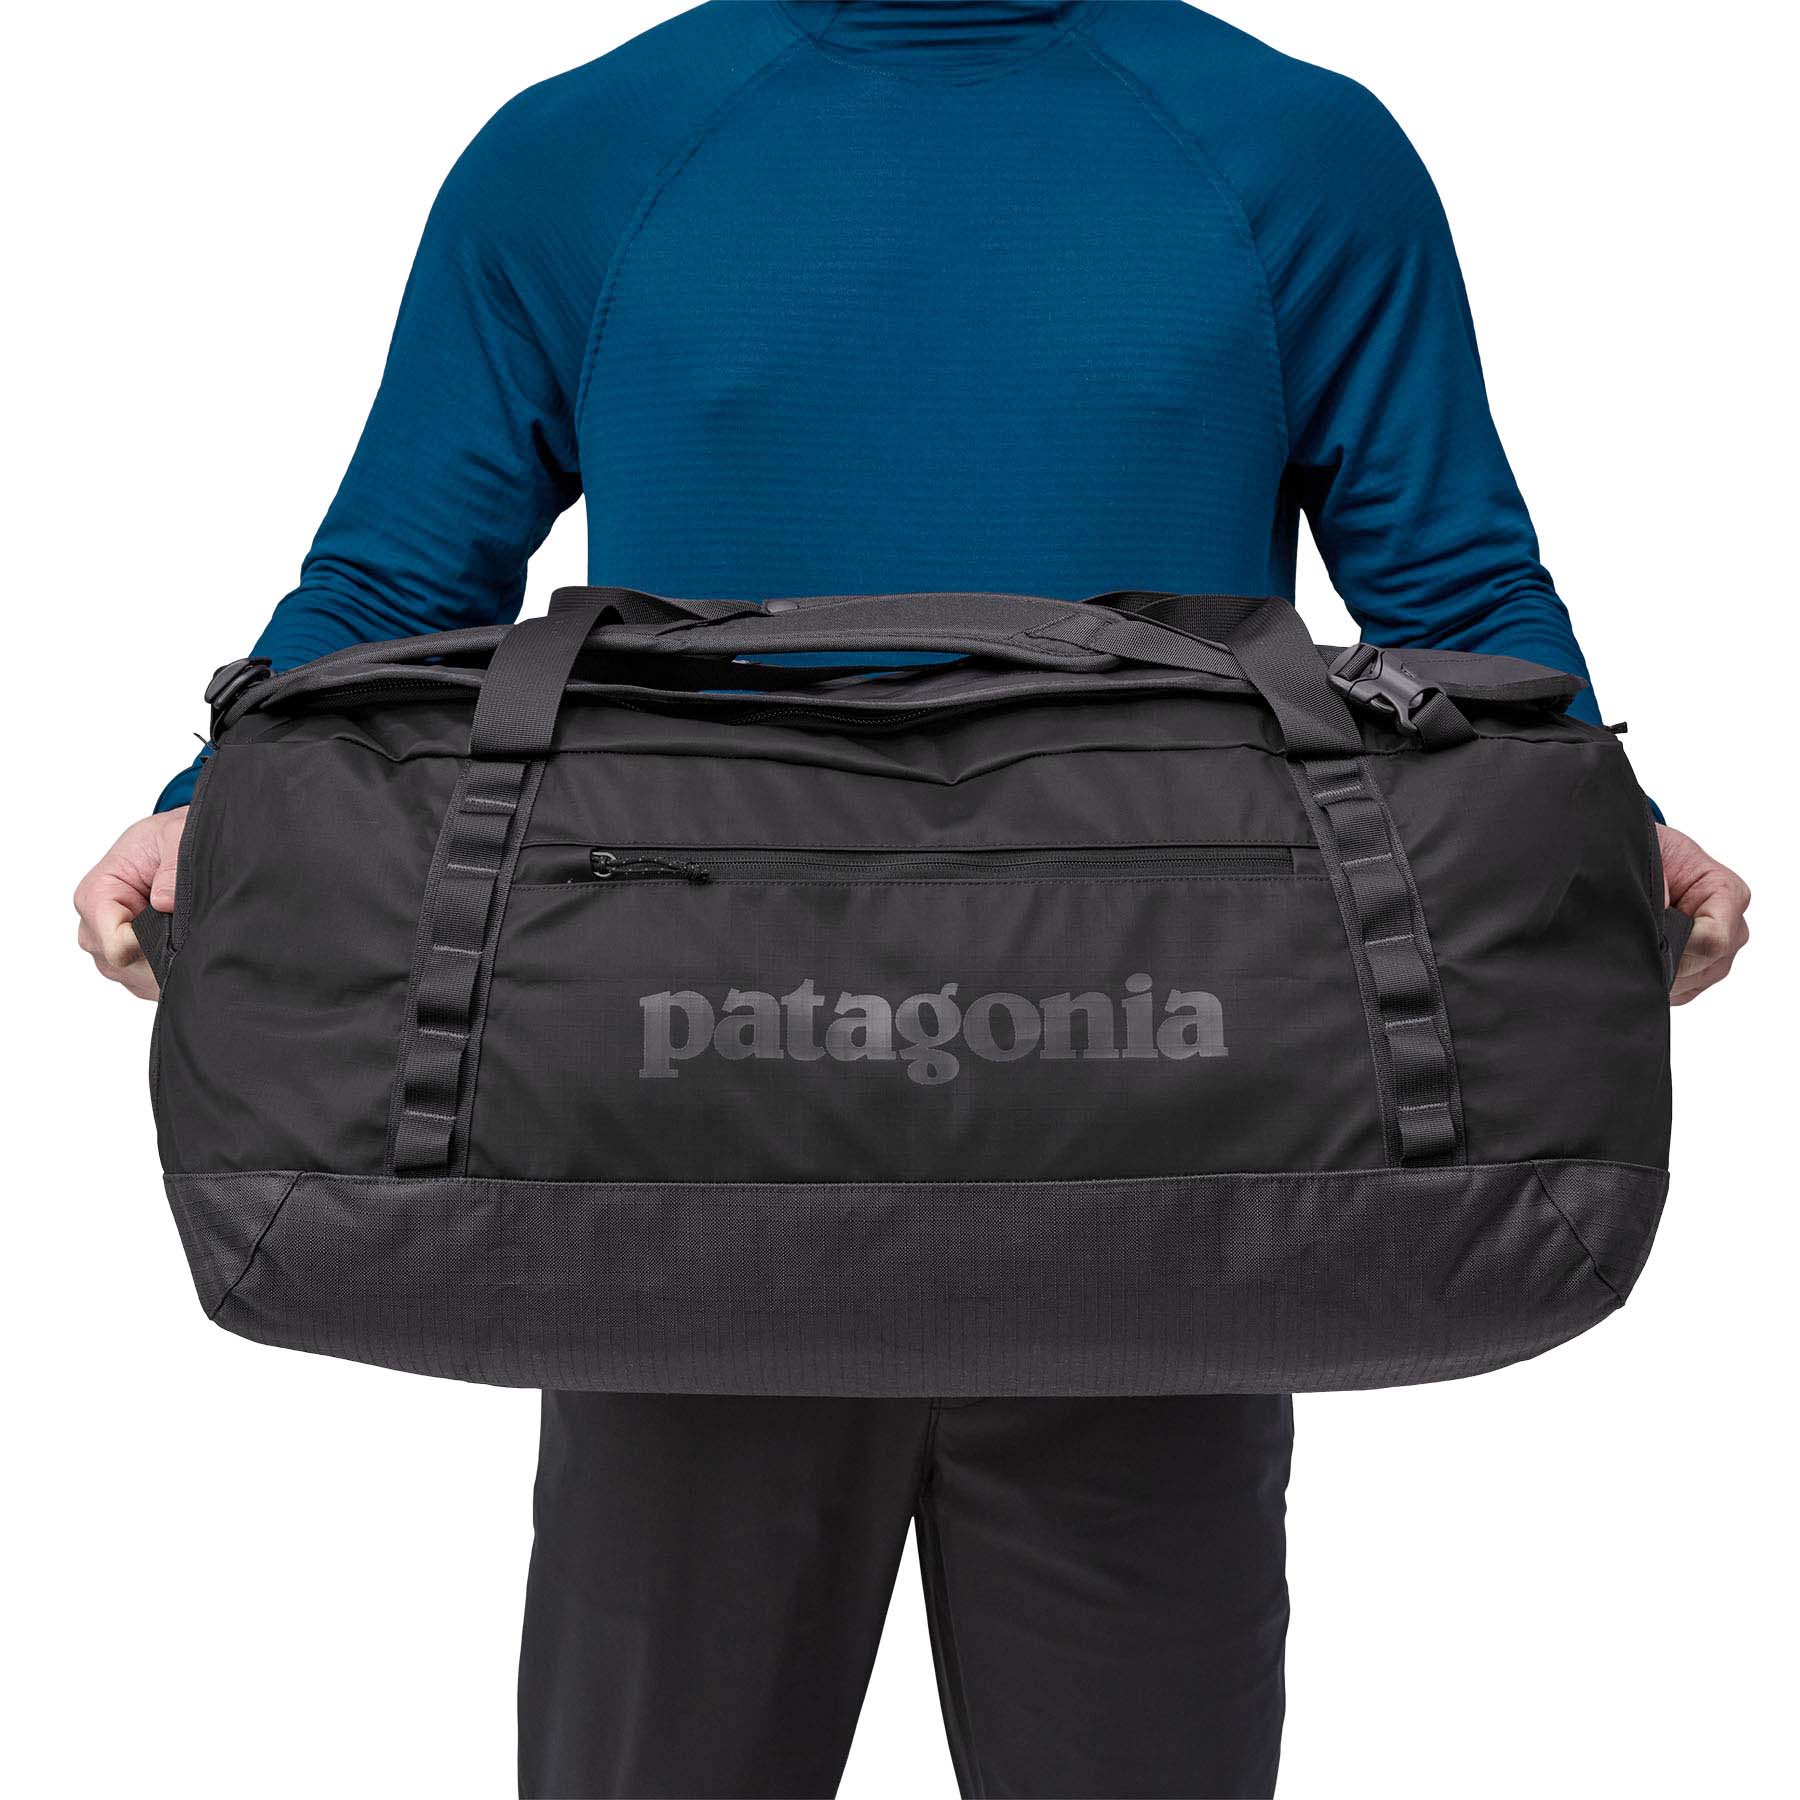 Patagonia Black Hole 70 Litre Duffel Bag